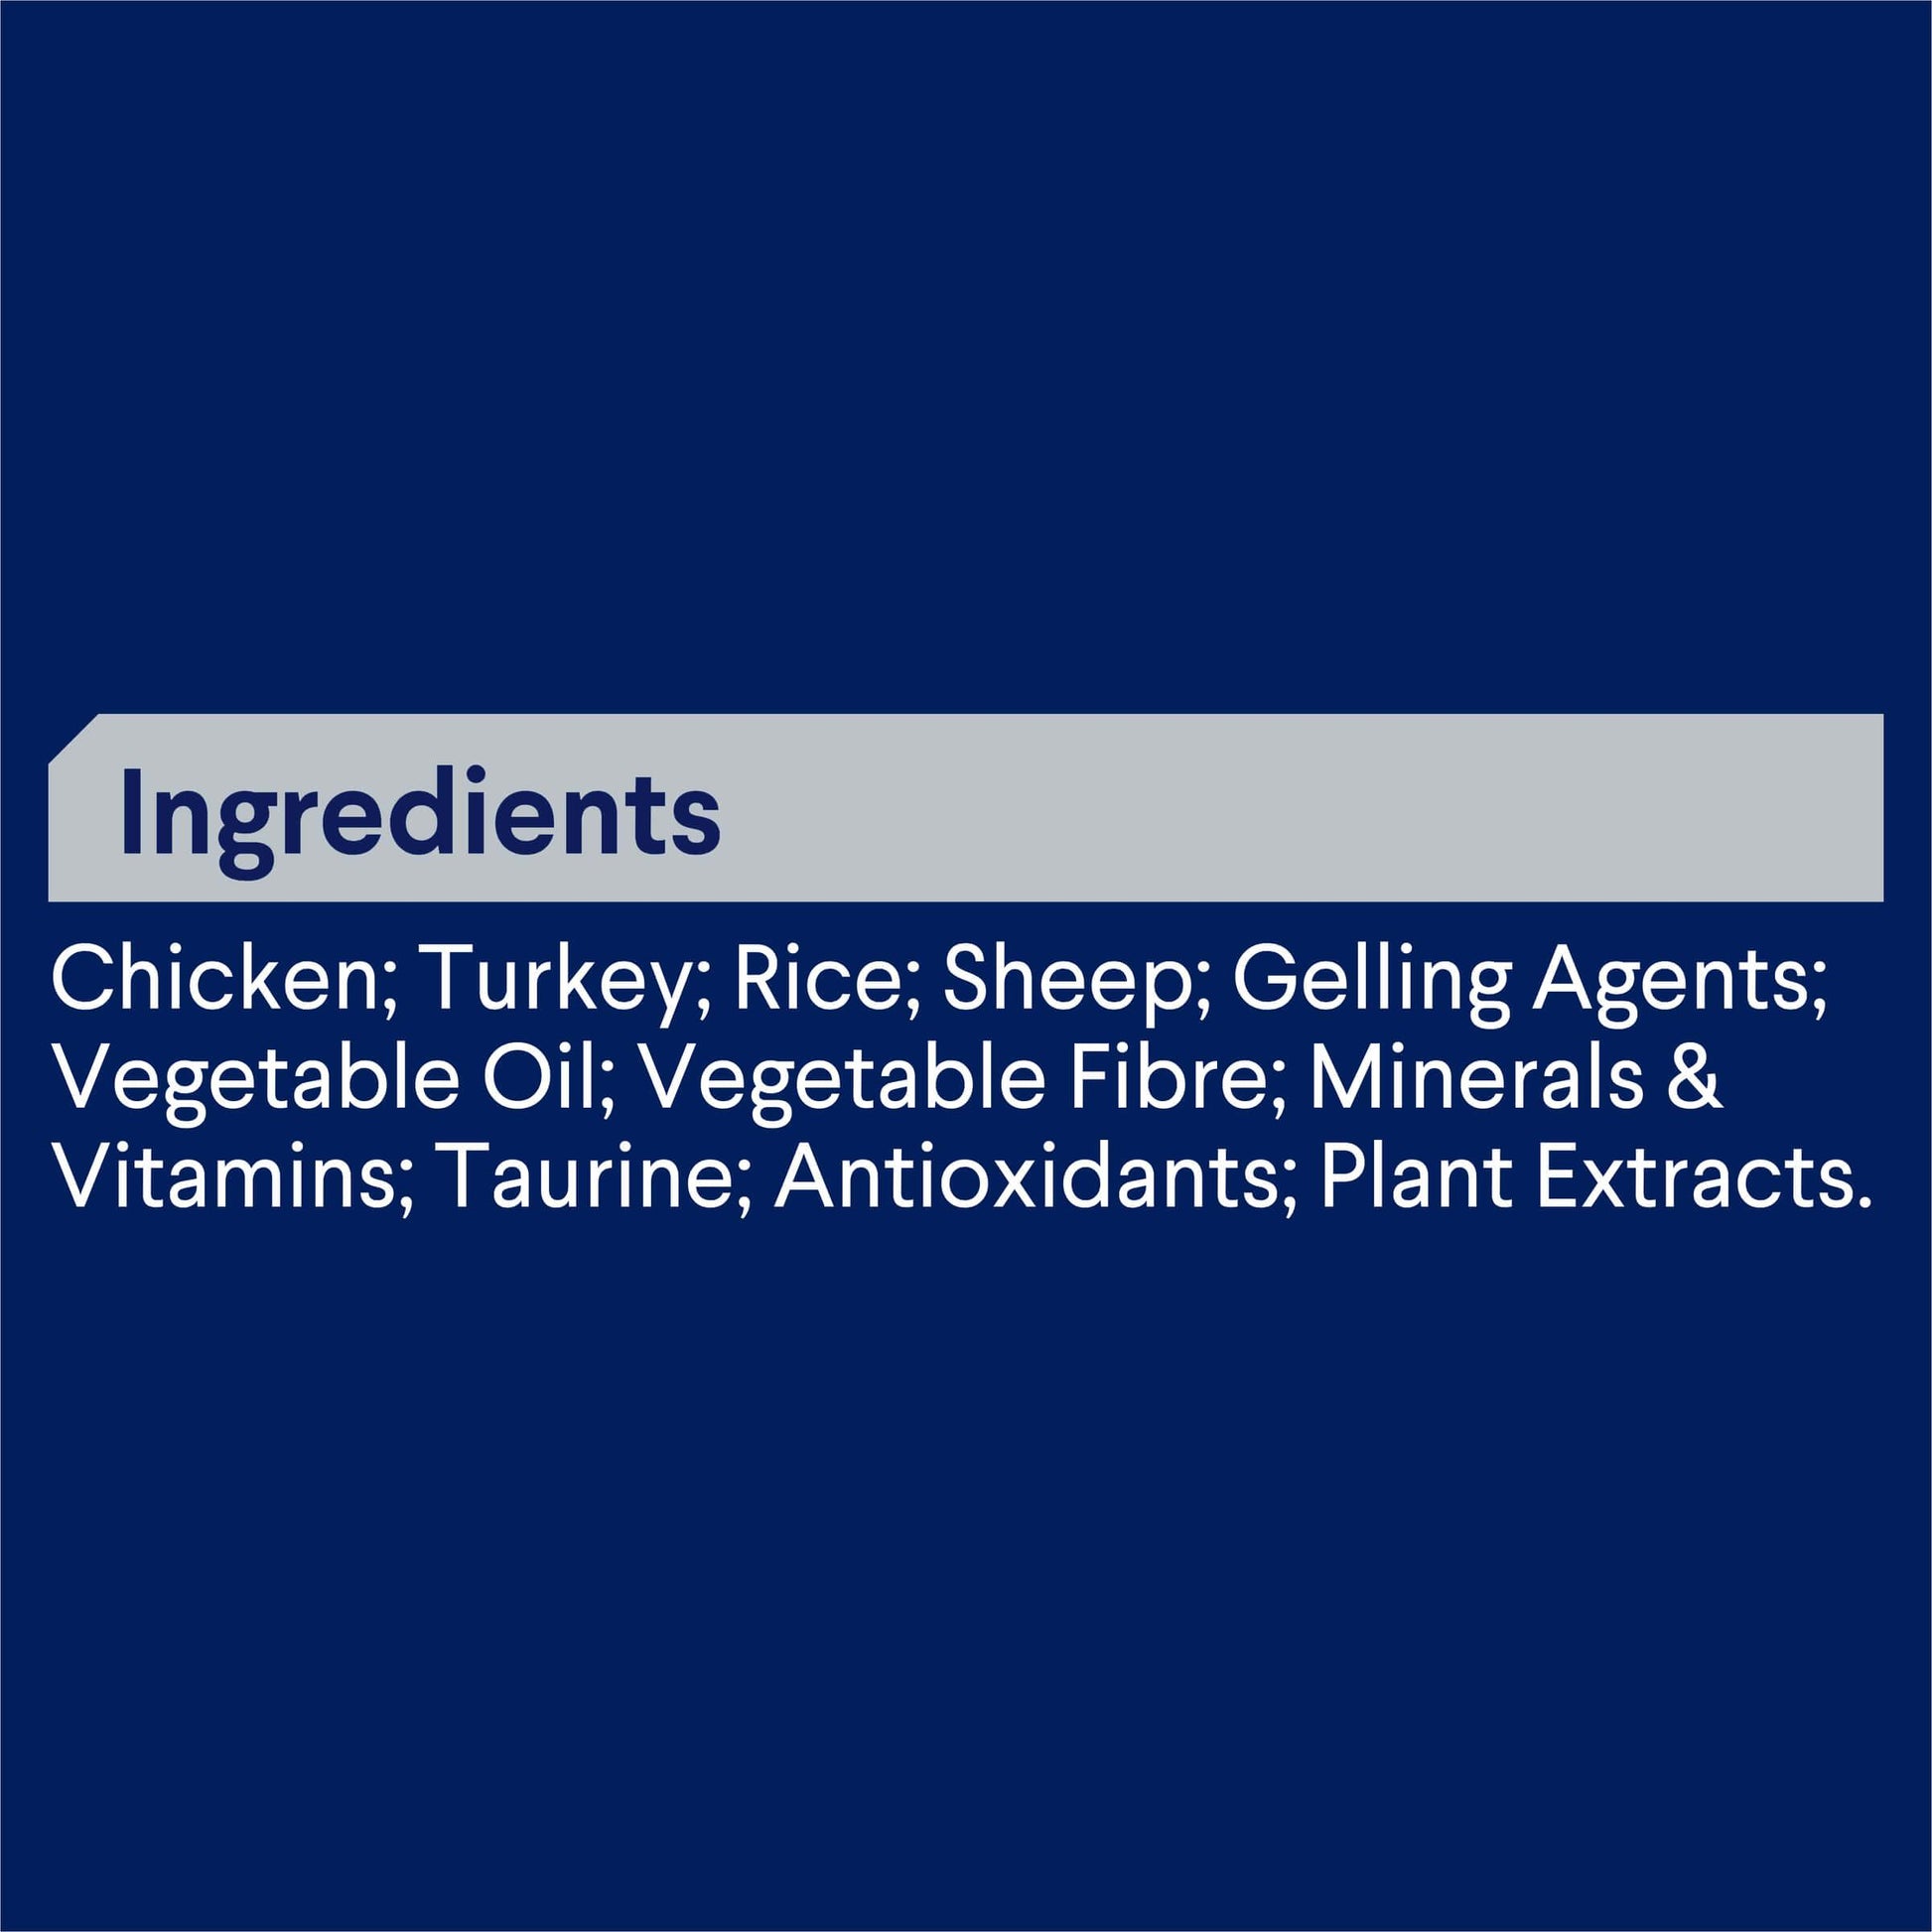 Advance Adult Chicken, Turkey & Rice Wet Dog Food (122711000101) [default_color]